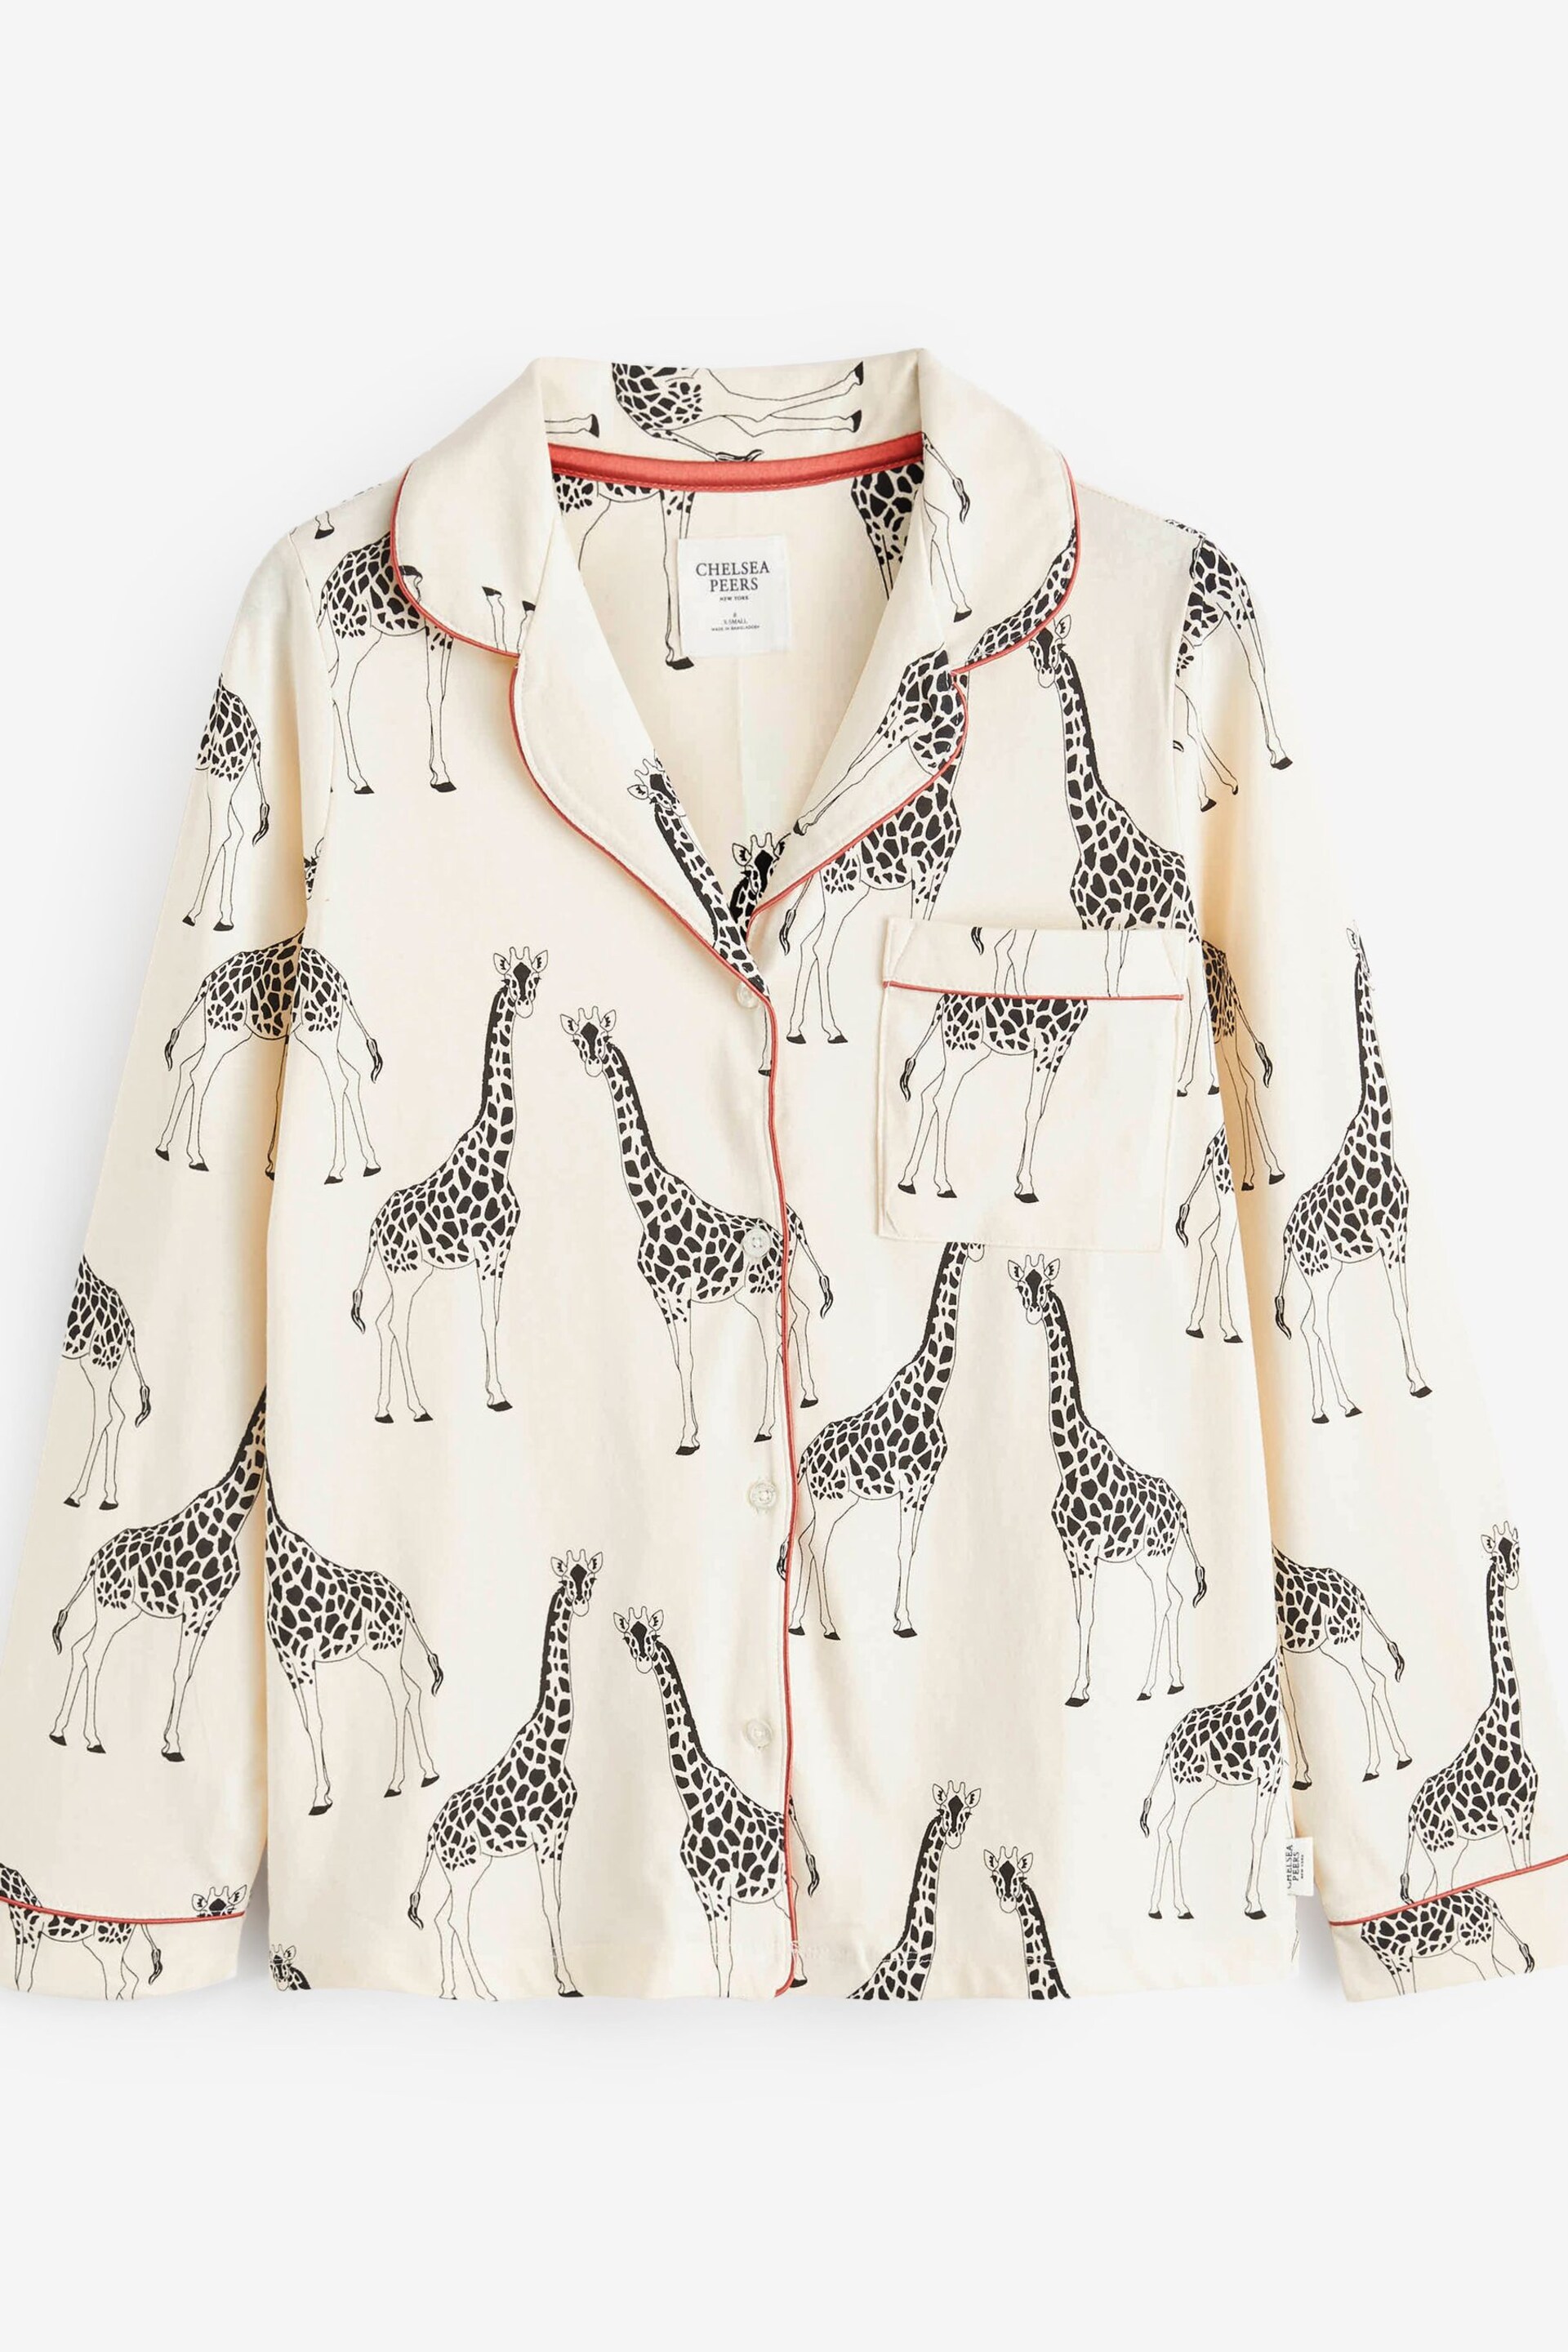 Chelsea Peers Cream Giraffe Button Up Long Pyjama Set - Image 8 of 9